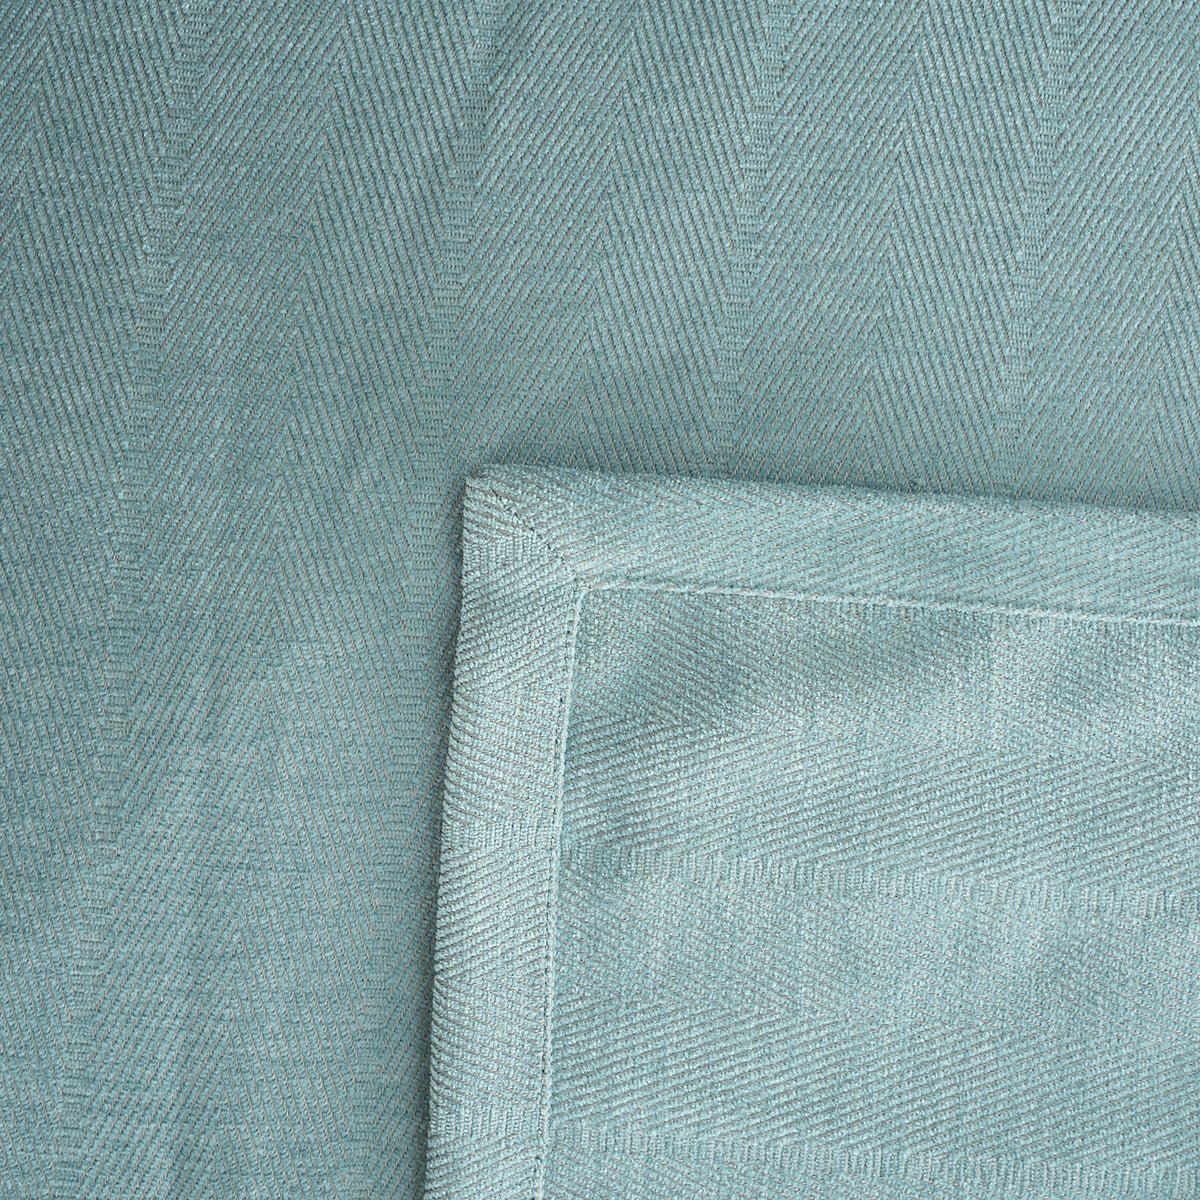 Caroline Woven Herringbone Pattern with Soft Drape Style Aqua Bed Cover/Blanket